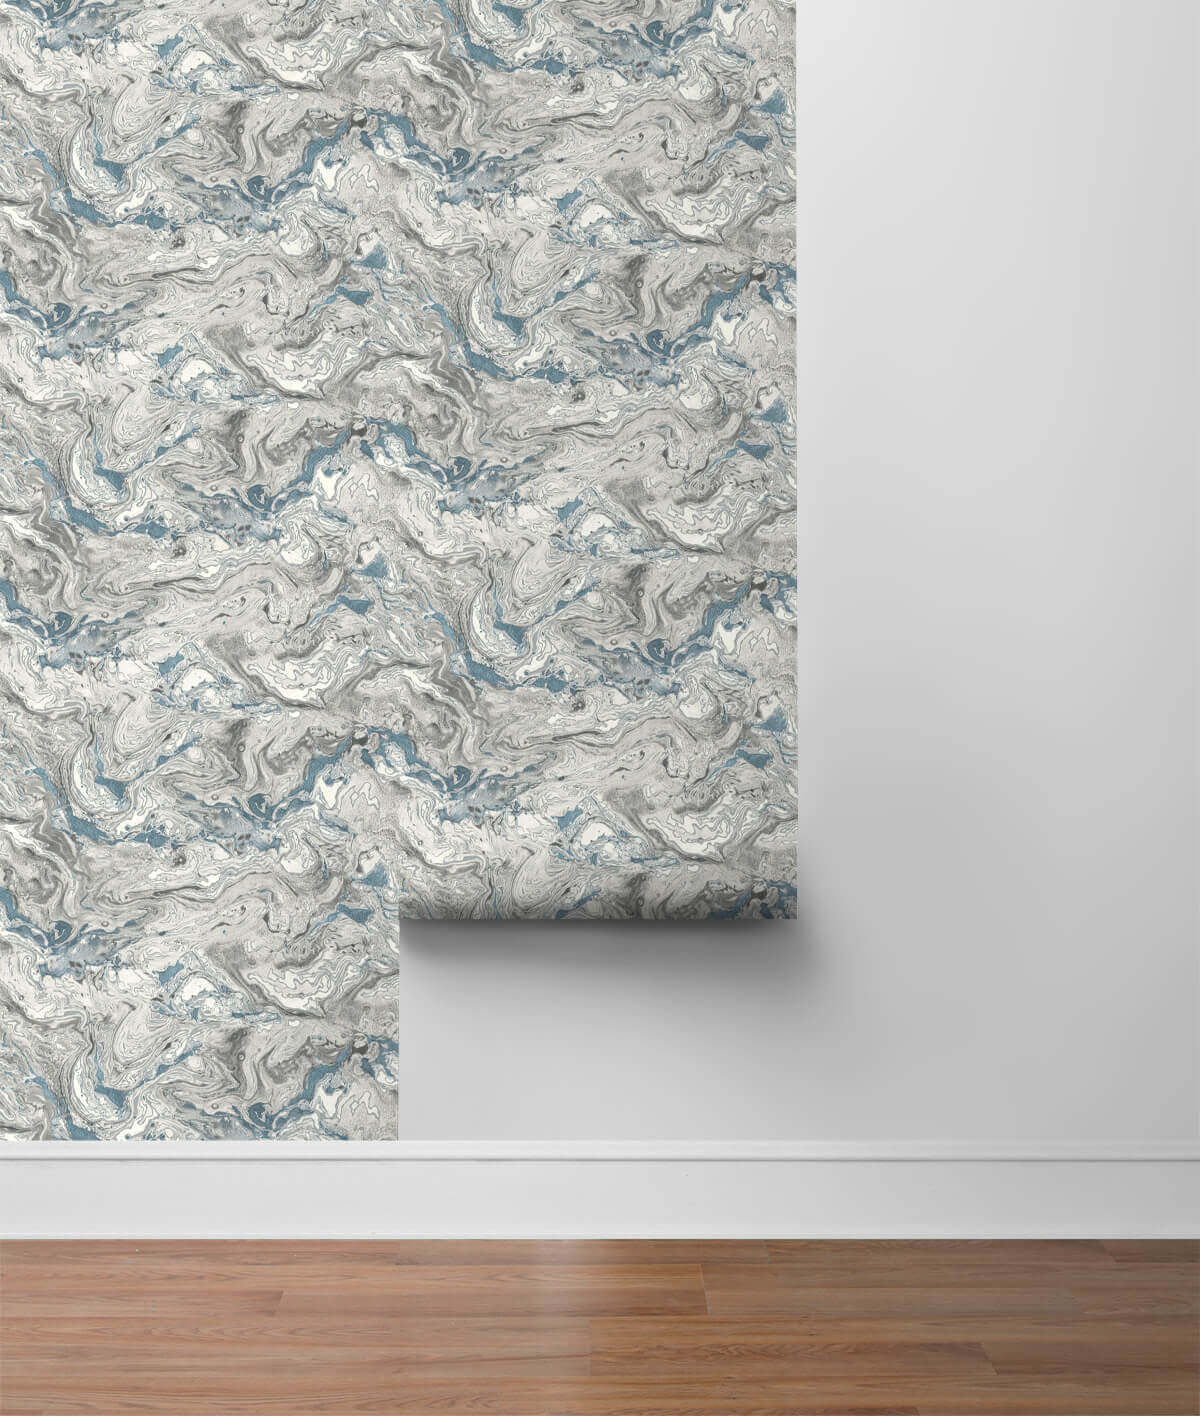 Lillian August Faux Marble Peel & Stick Wallpaper - Lunar Rock Blue